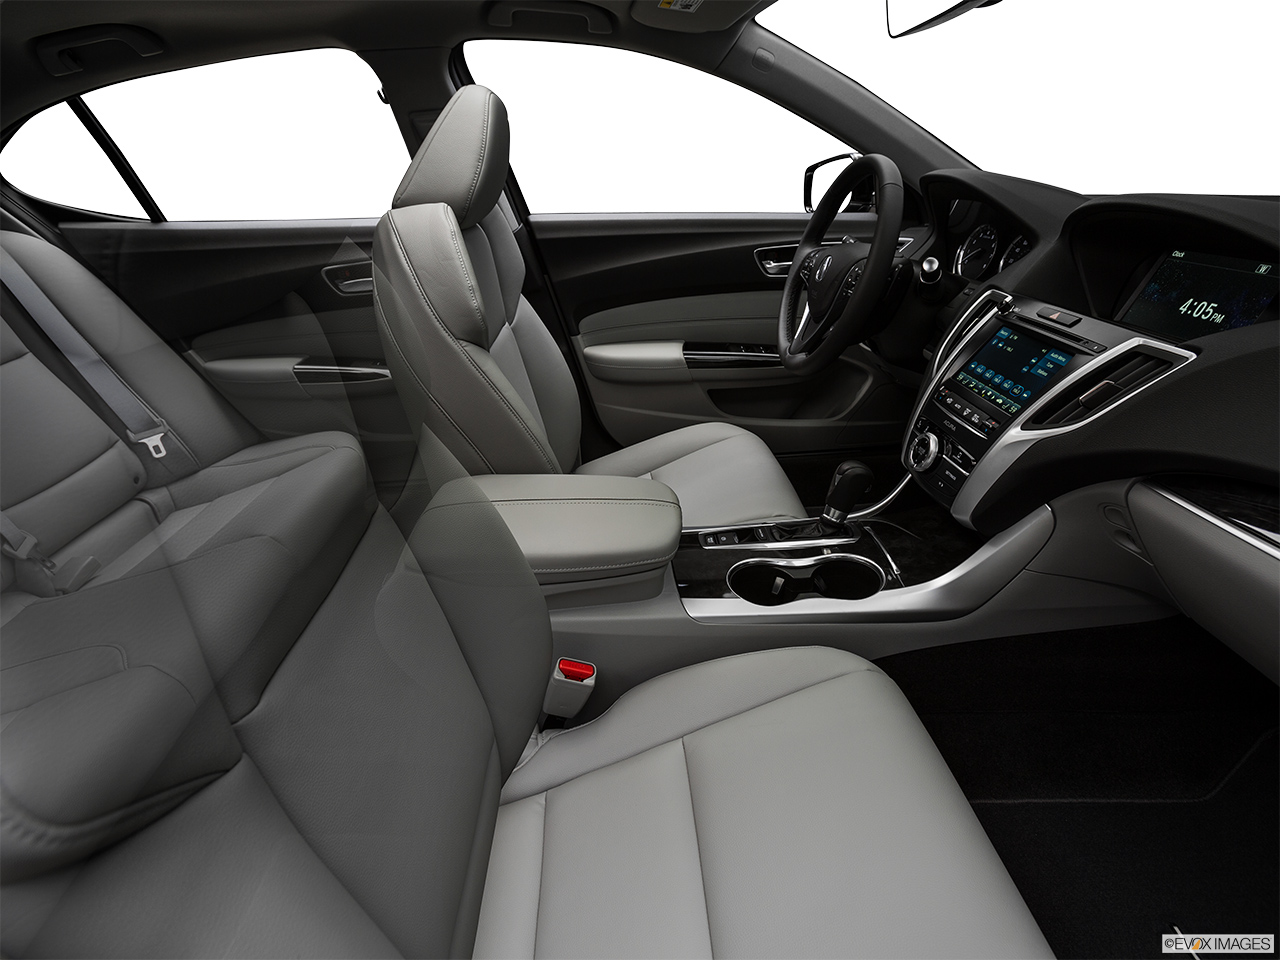 2019 Acura TLX 2.4 8-DCT P-AWS Fake Buck Shot - Interior from Passenger B pillar. 